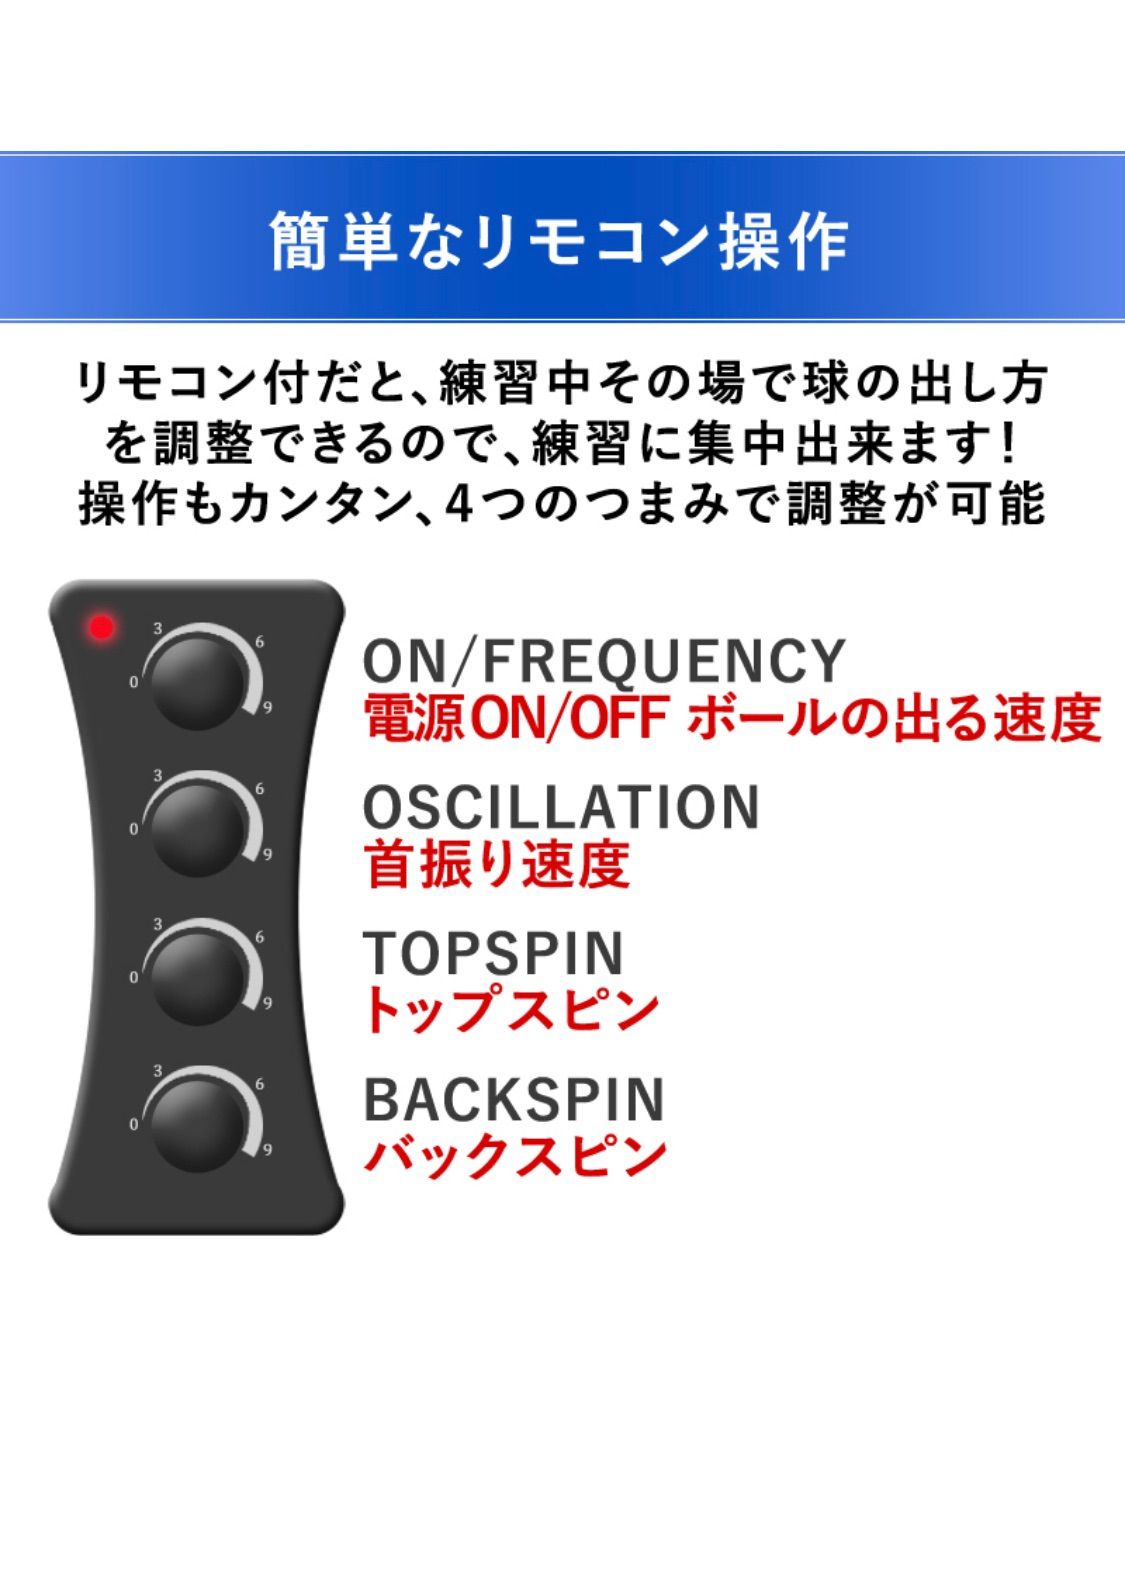 i pong pro アイポン プロ 自動卓球マシン 【専用ネット付き】 - メルカリ